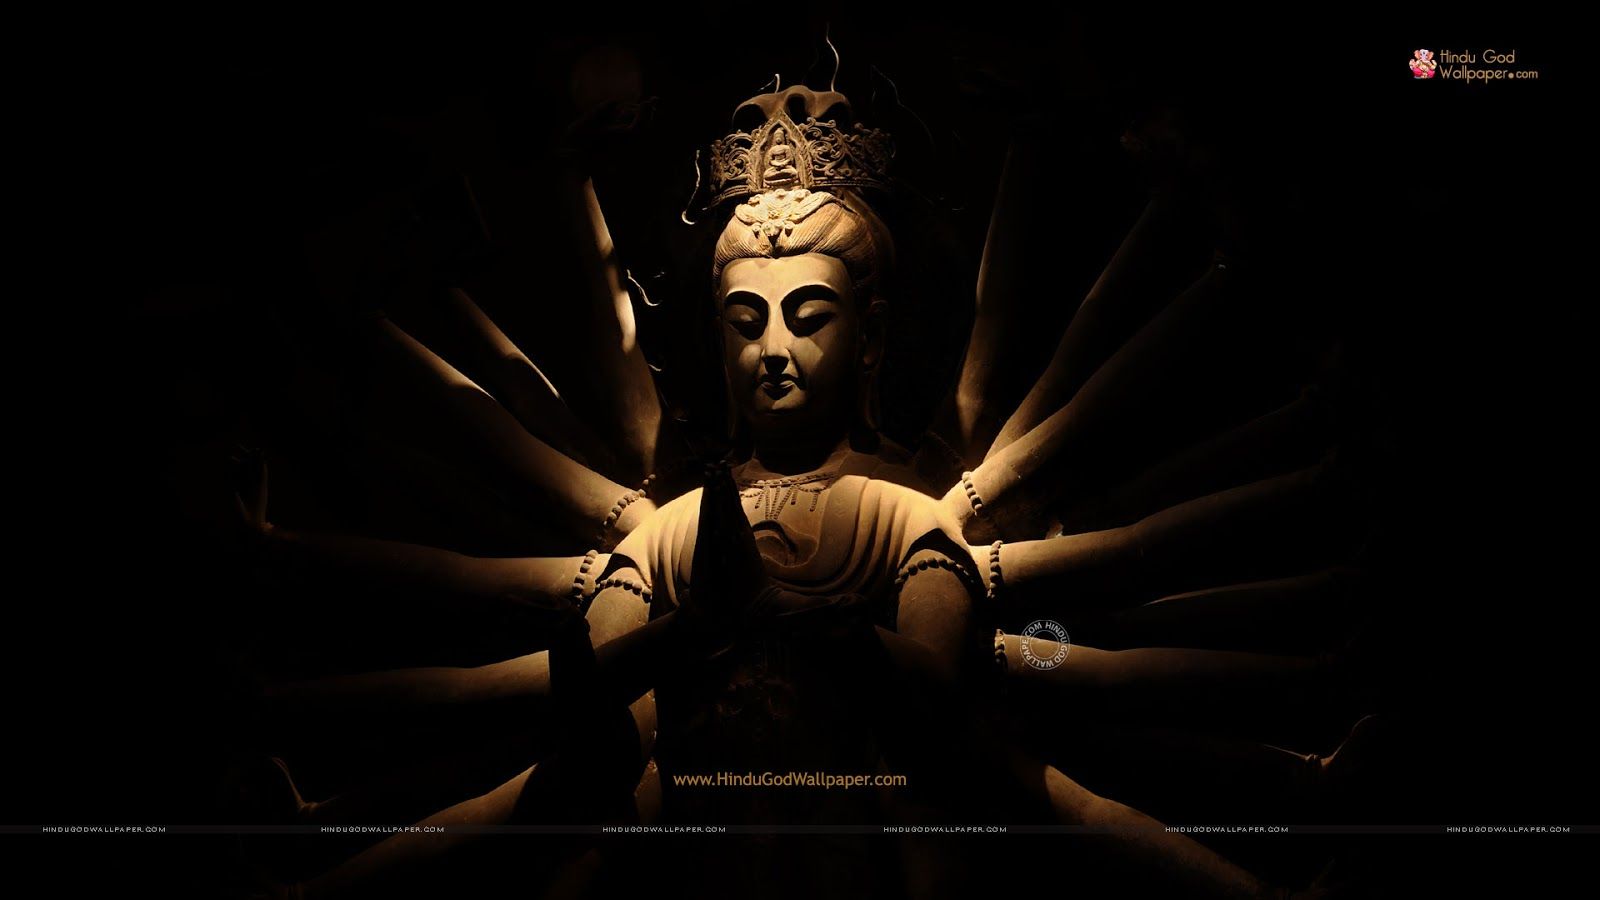 Buddha Wallpaper for My Desktop